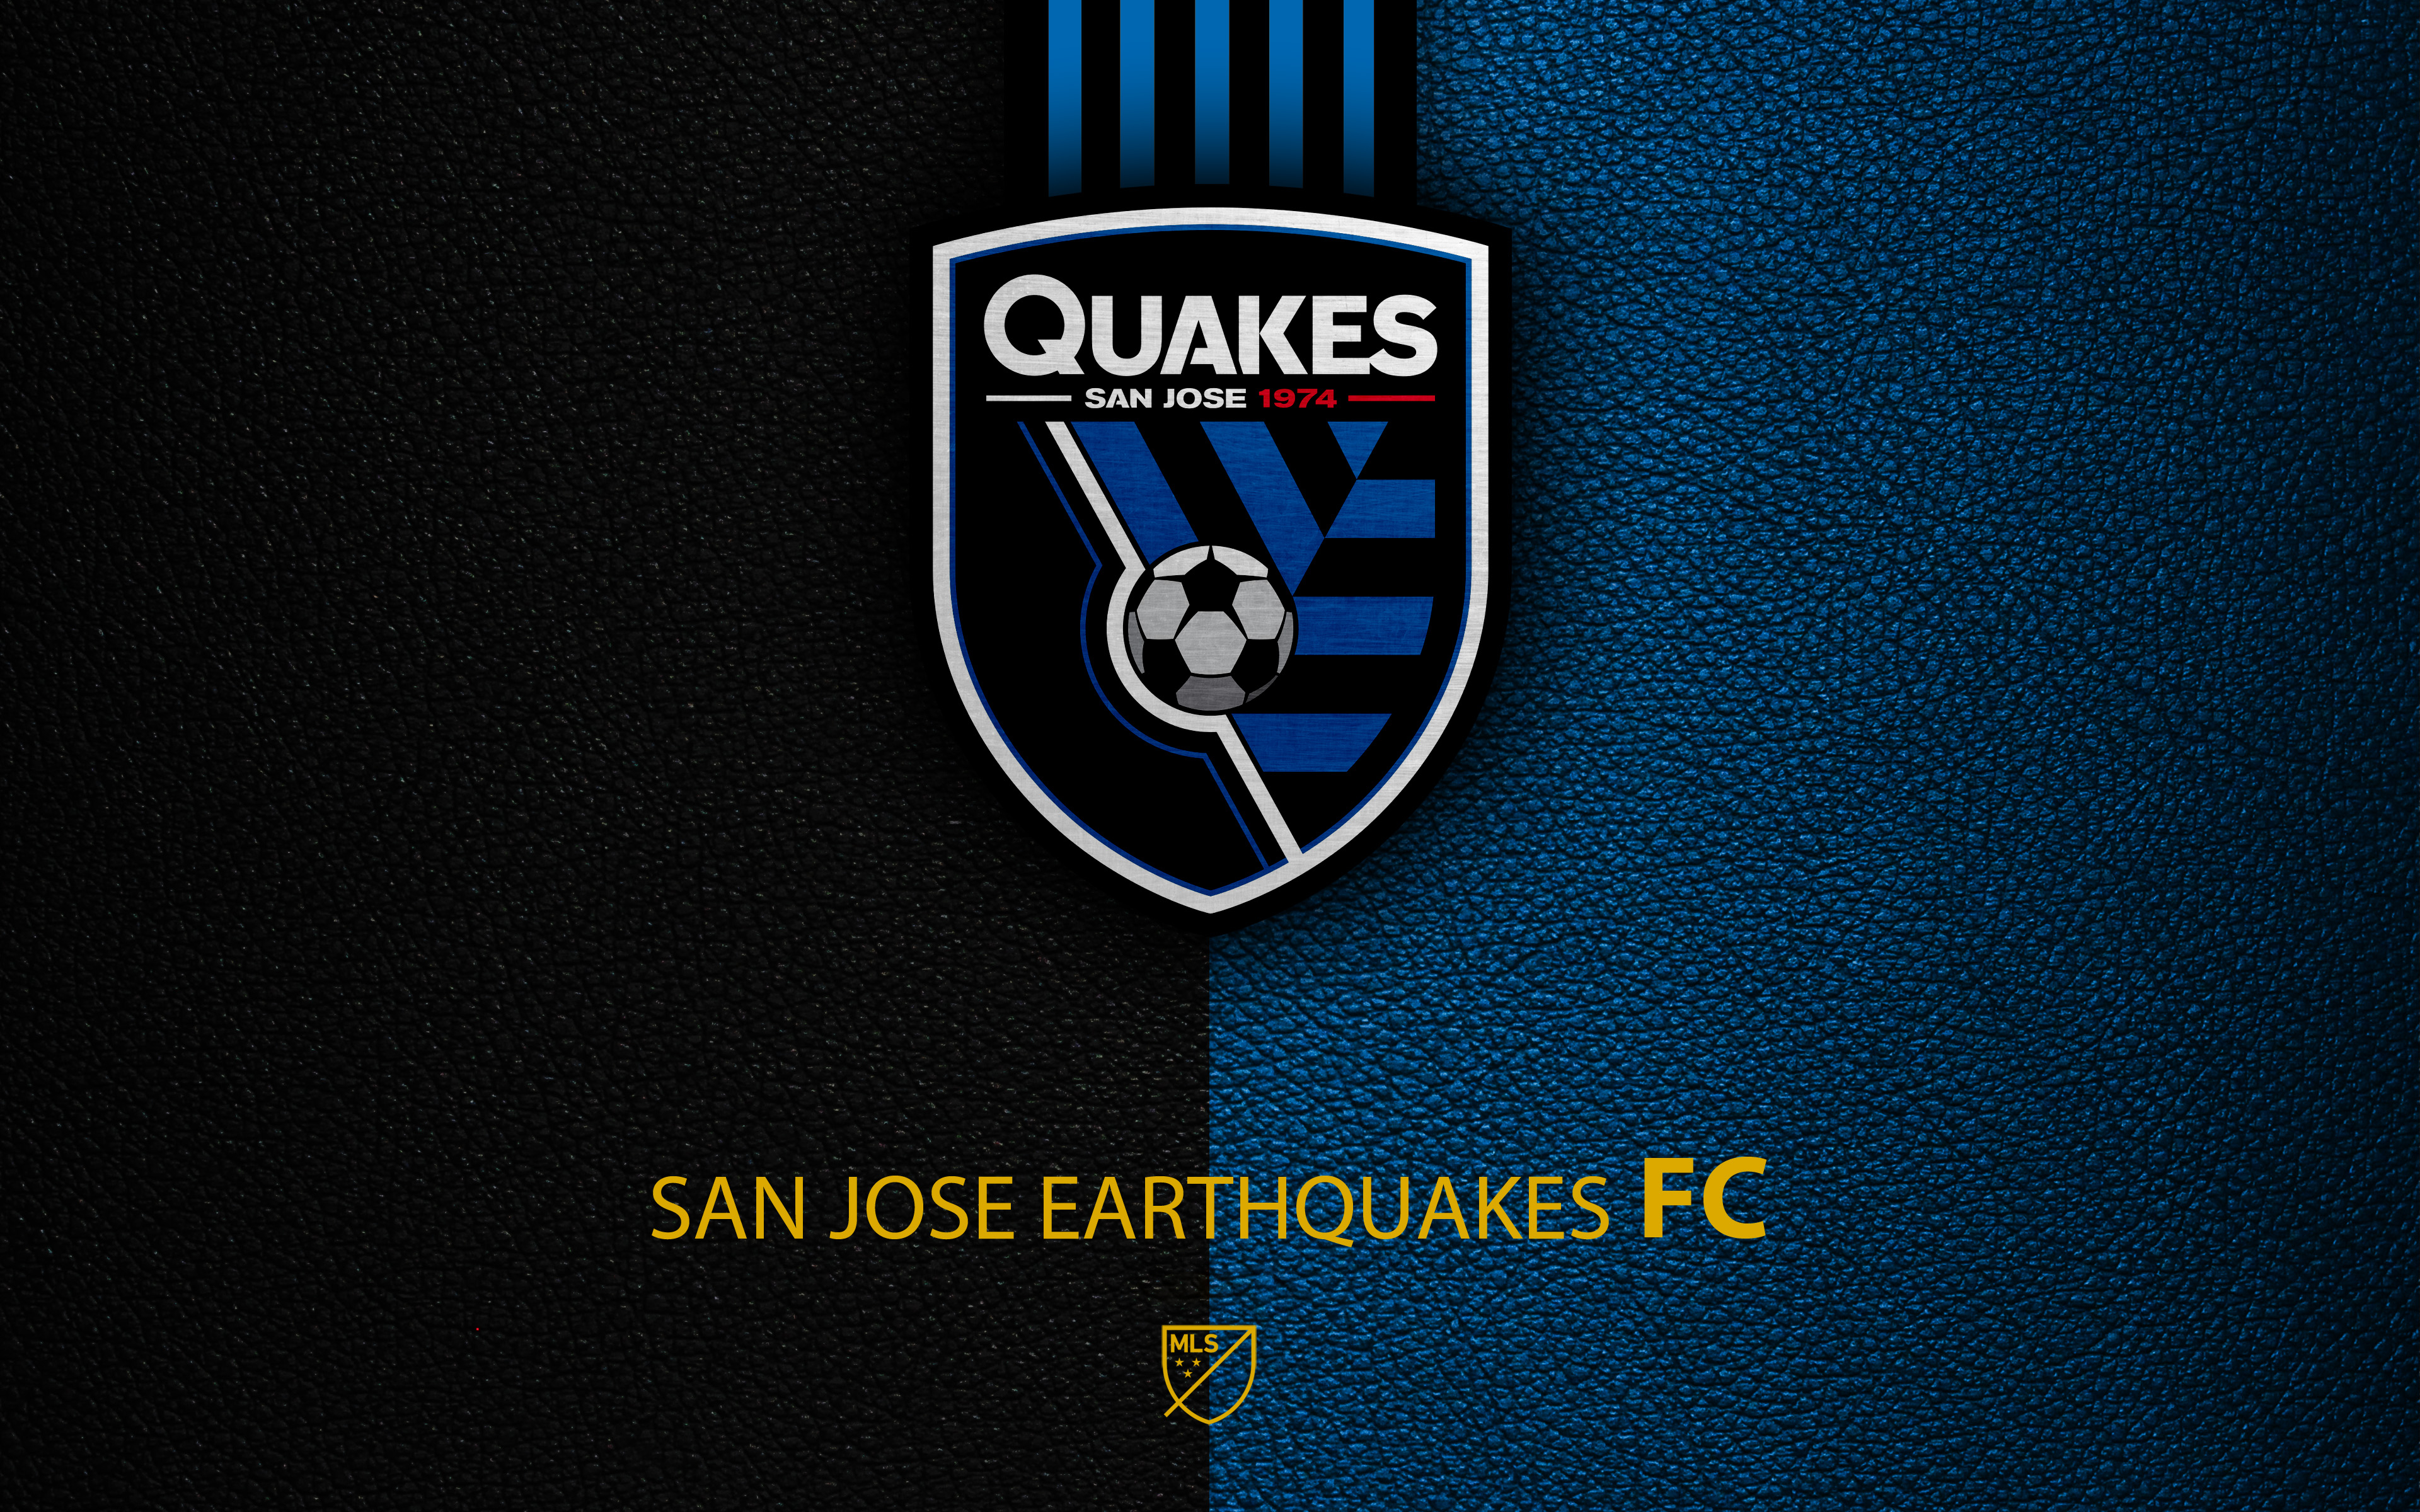 San Jose Earthquakes 4k Ultra HD Wallpaper Background Image